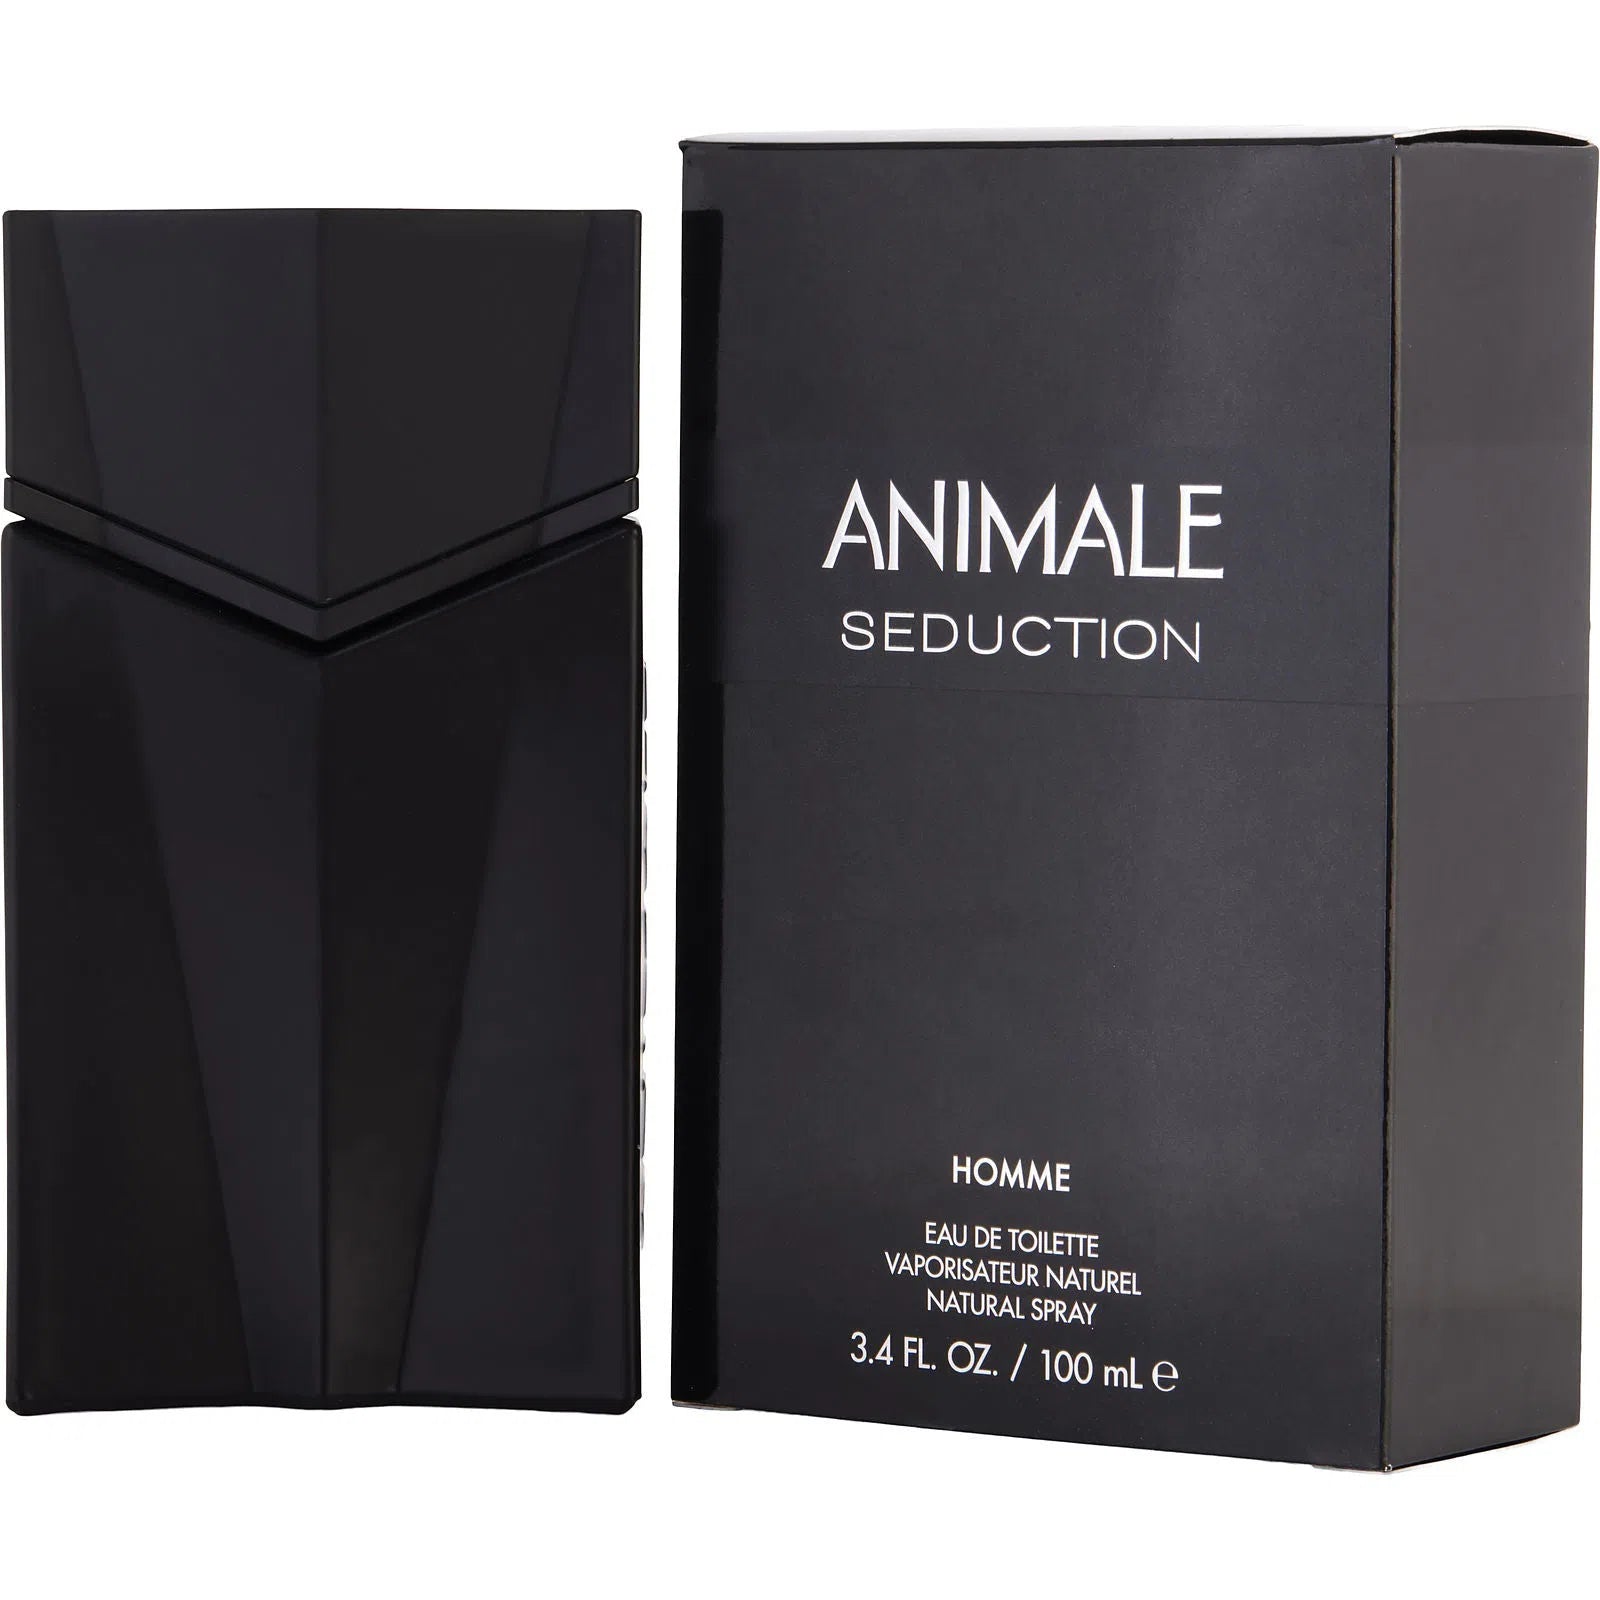 Perfume Animale Seduction Homme EDT (M) / 100 ml - 878813000025- Prive Perfumes Honduras